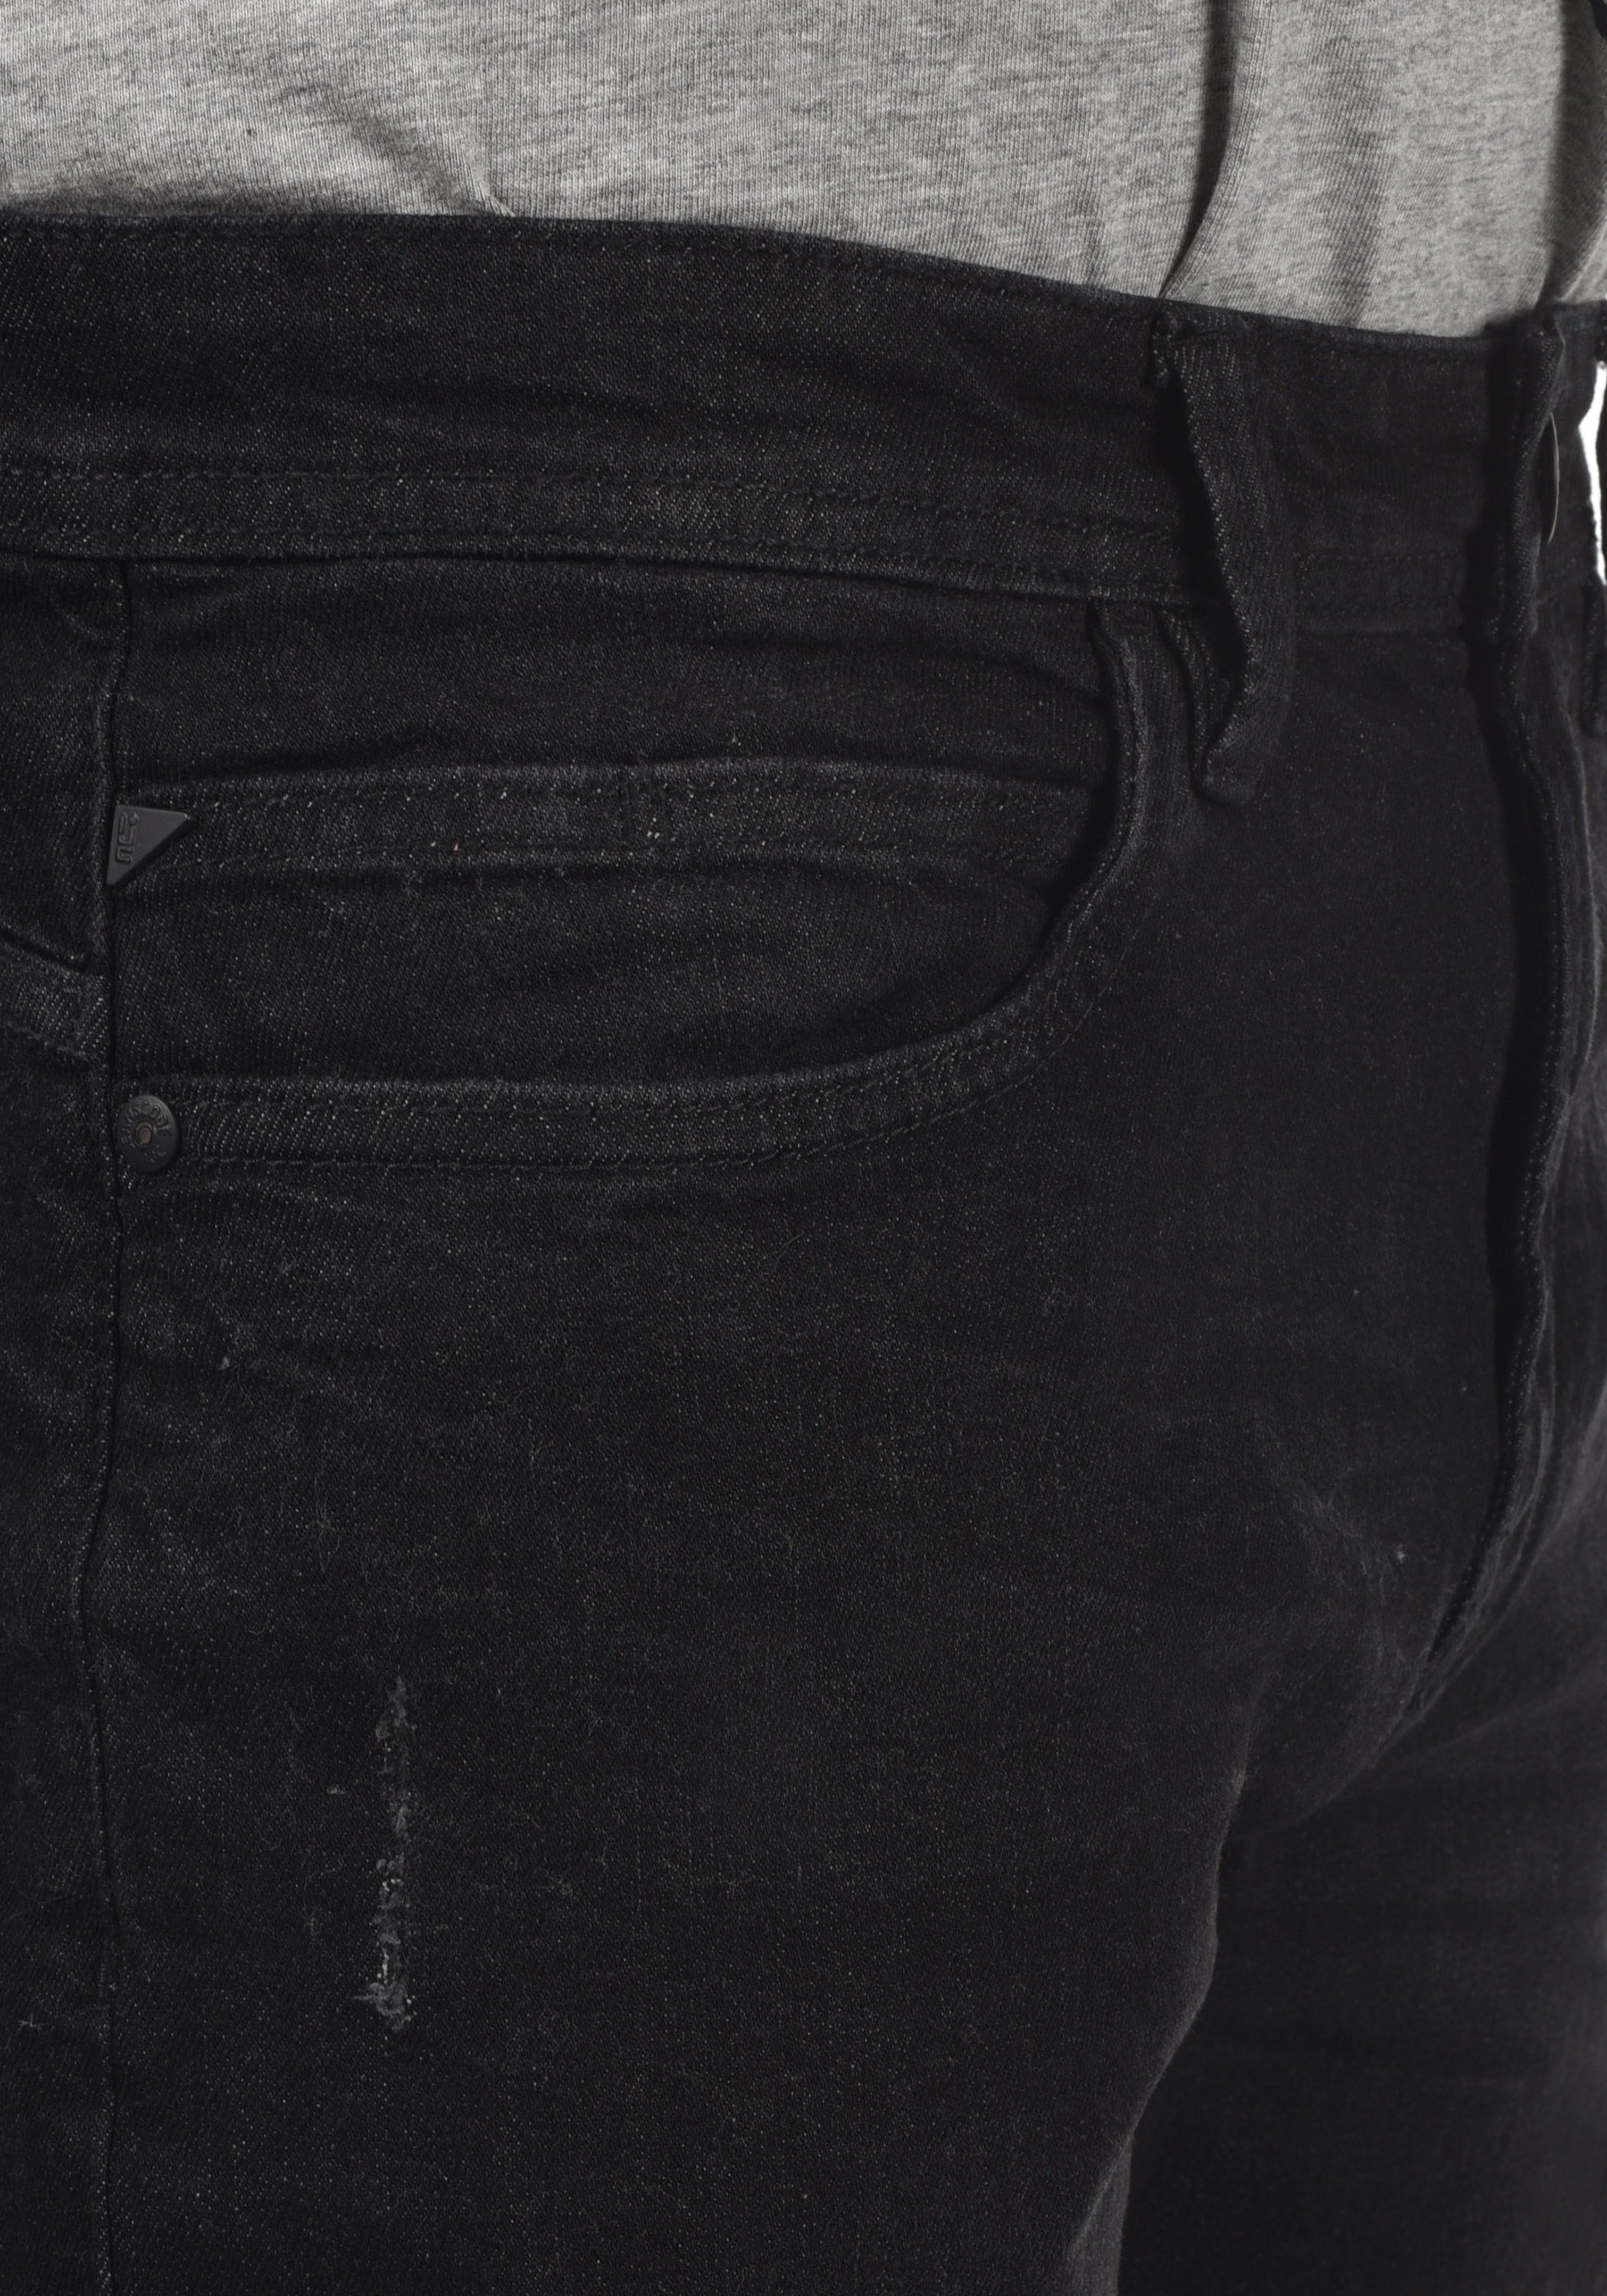 Indicode 5-Pocket-Jeans IDQuebec Black (999)